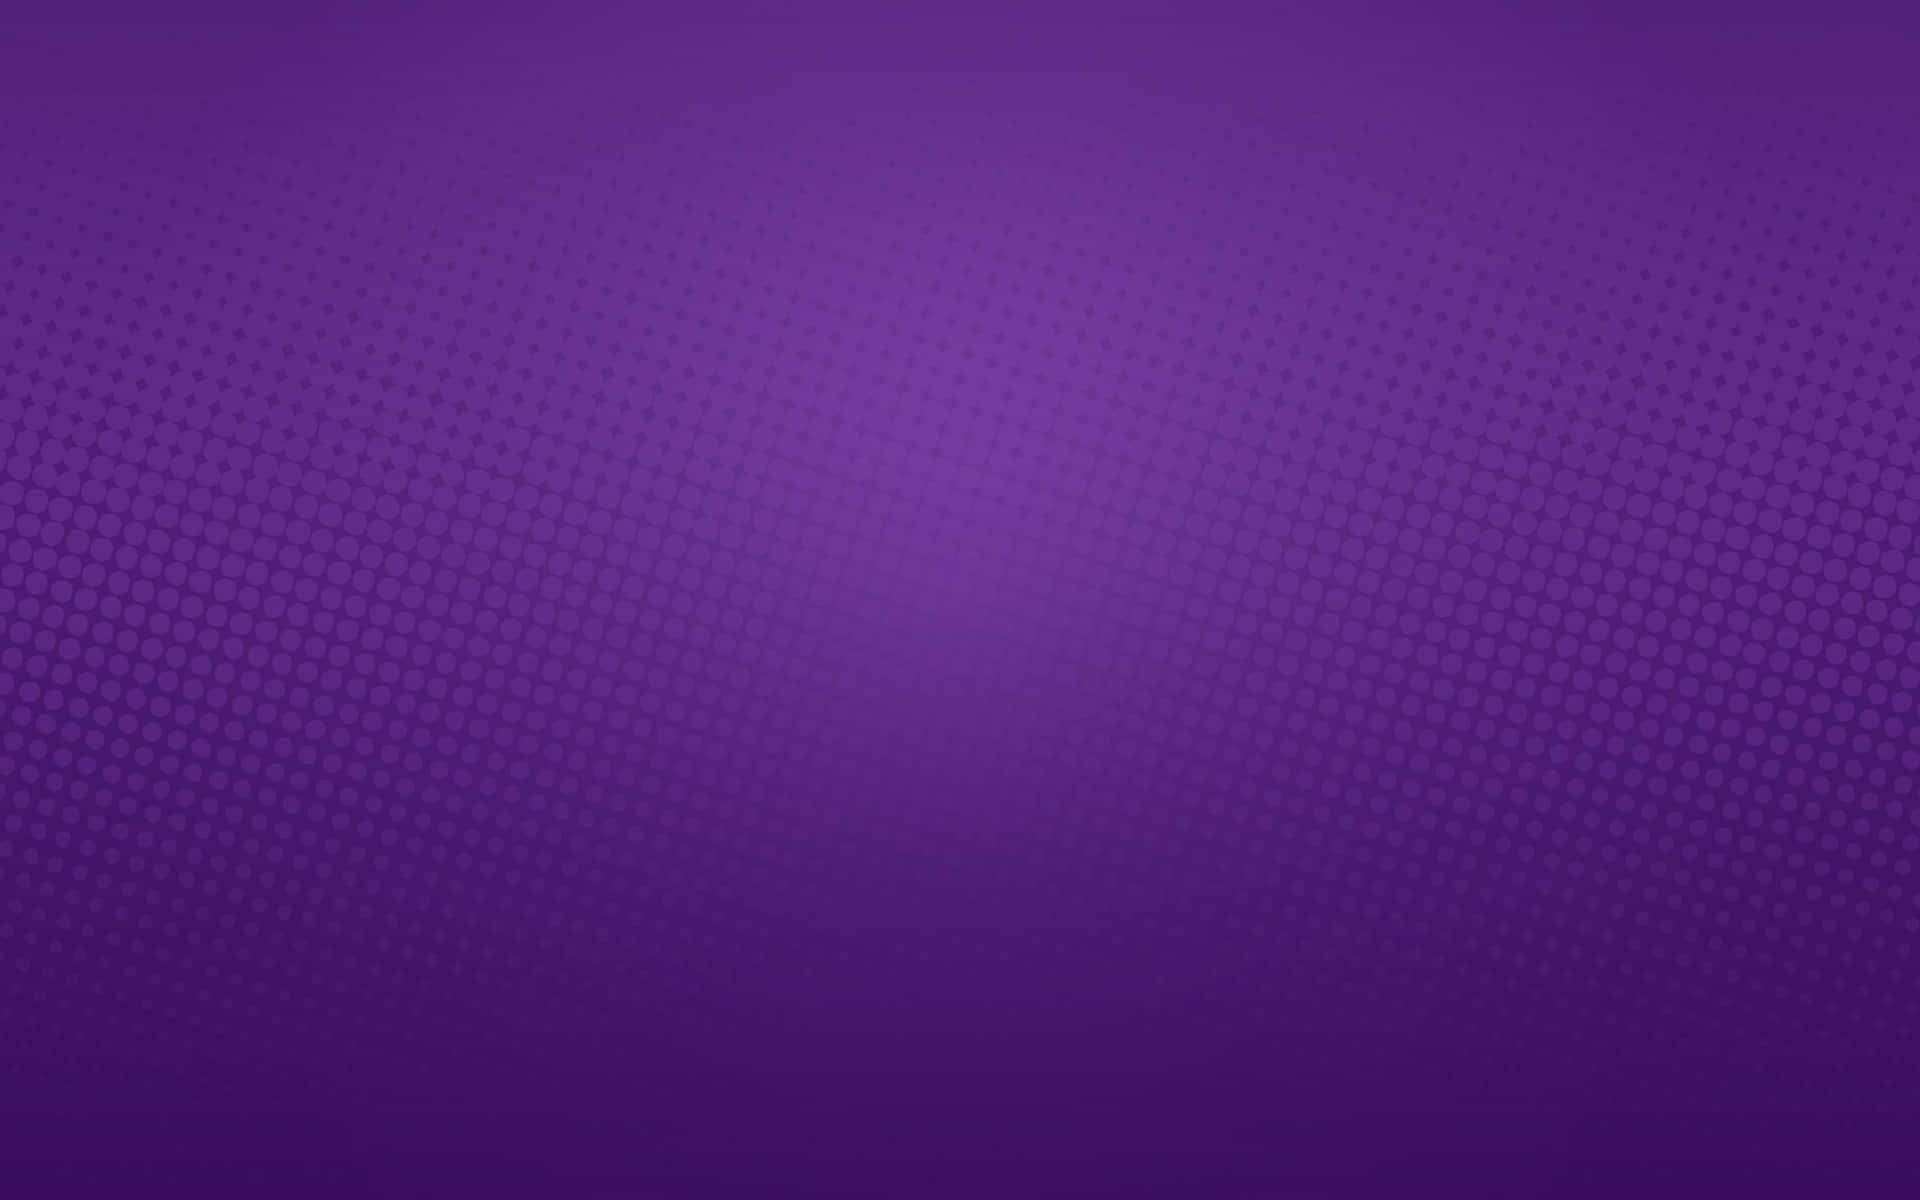 Get ahead with a great-looking Purple Desktop Wallpaper